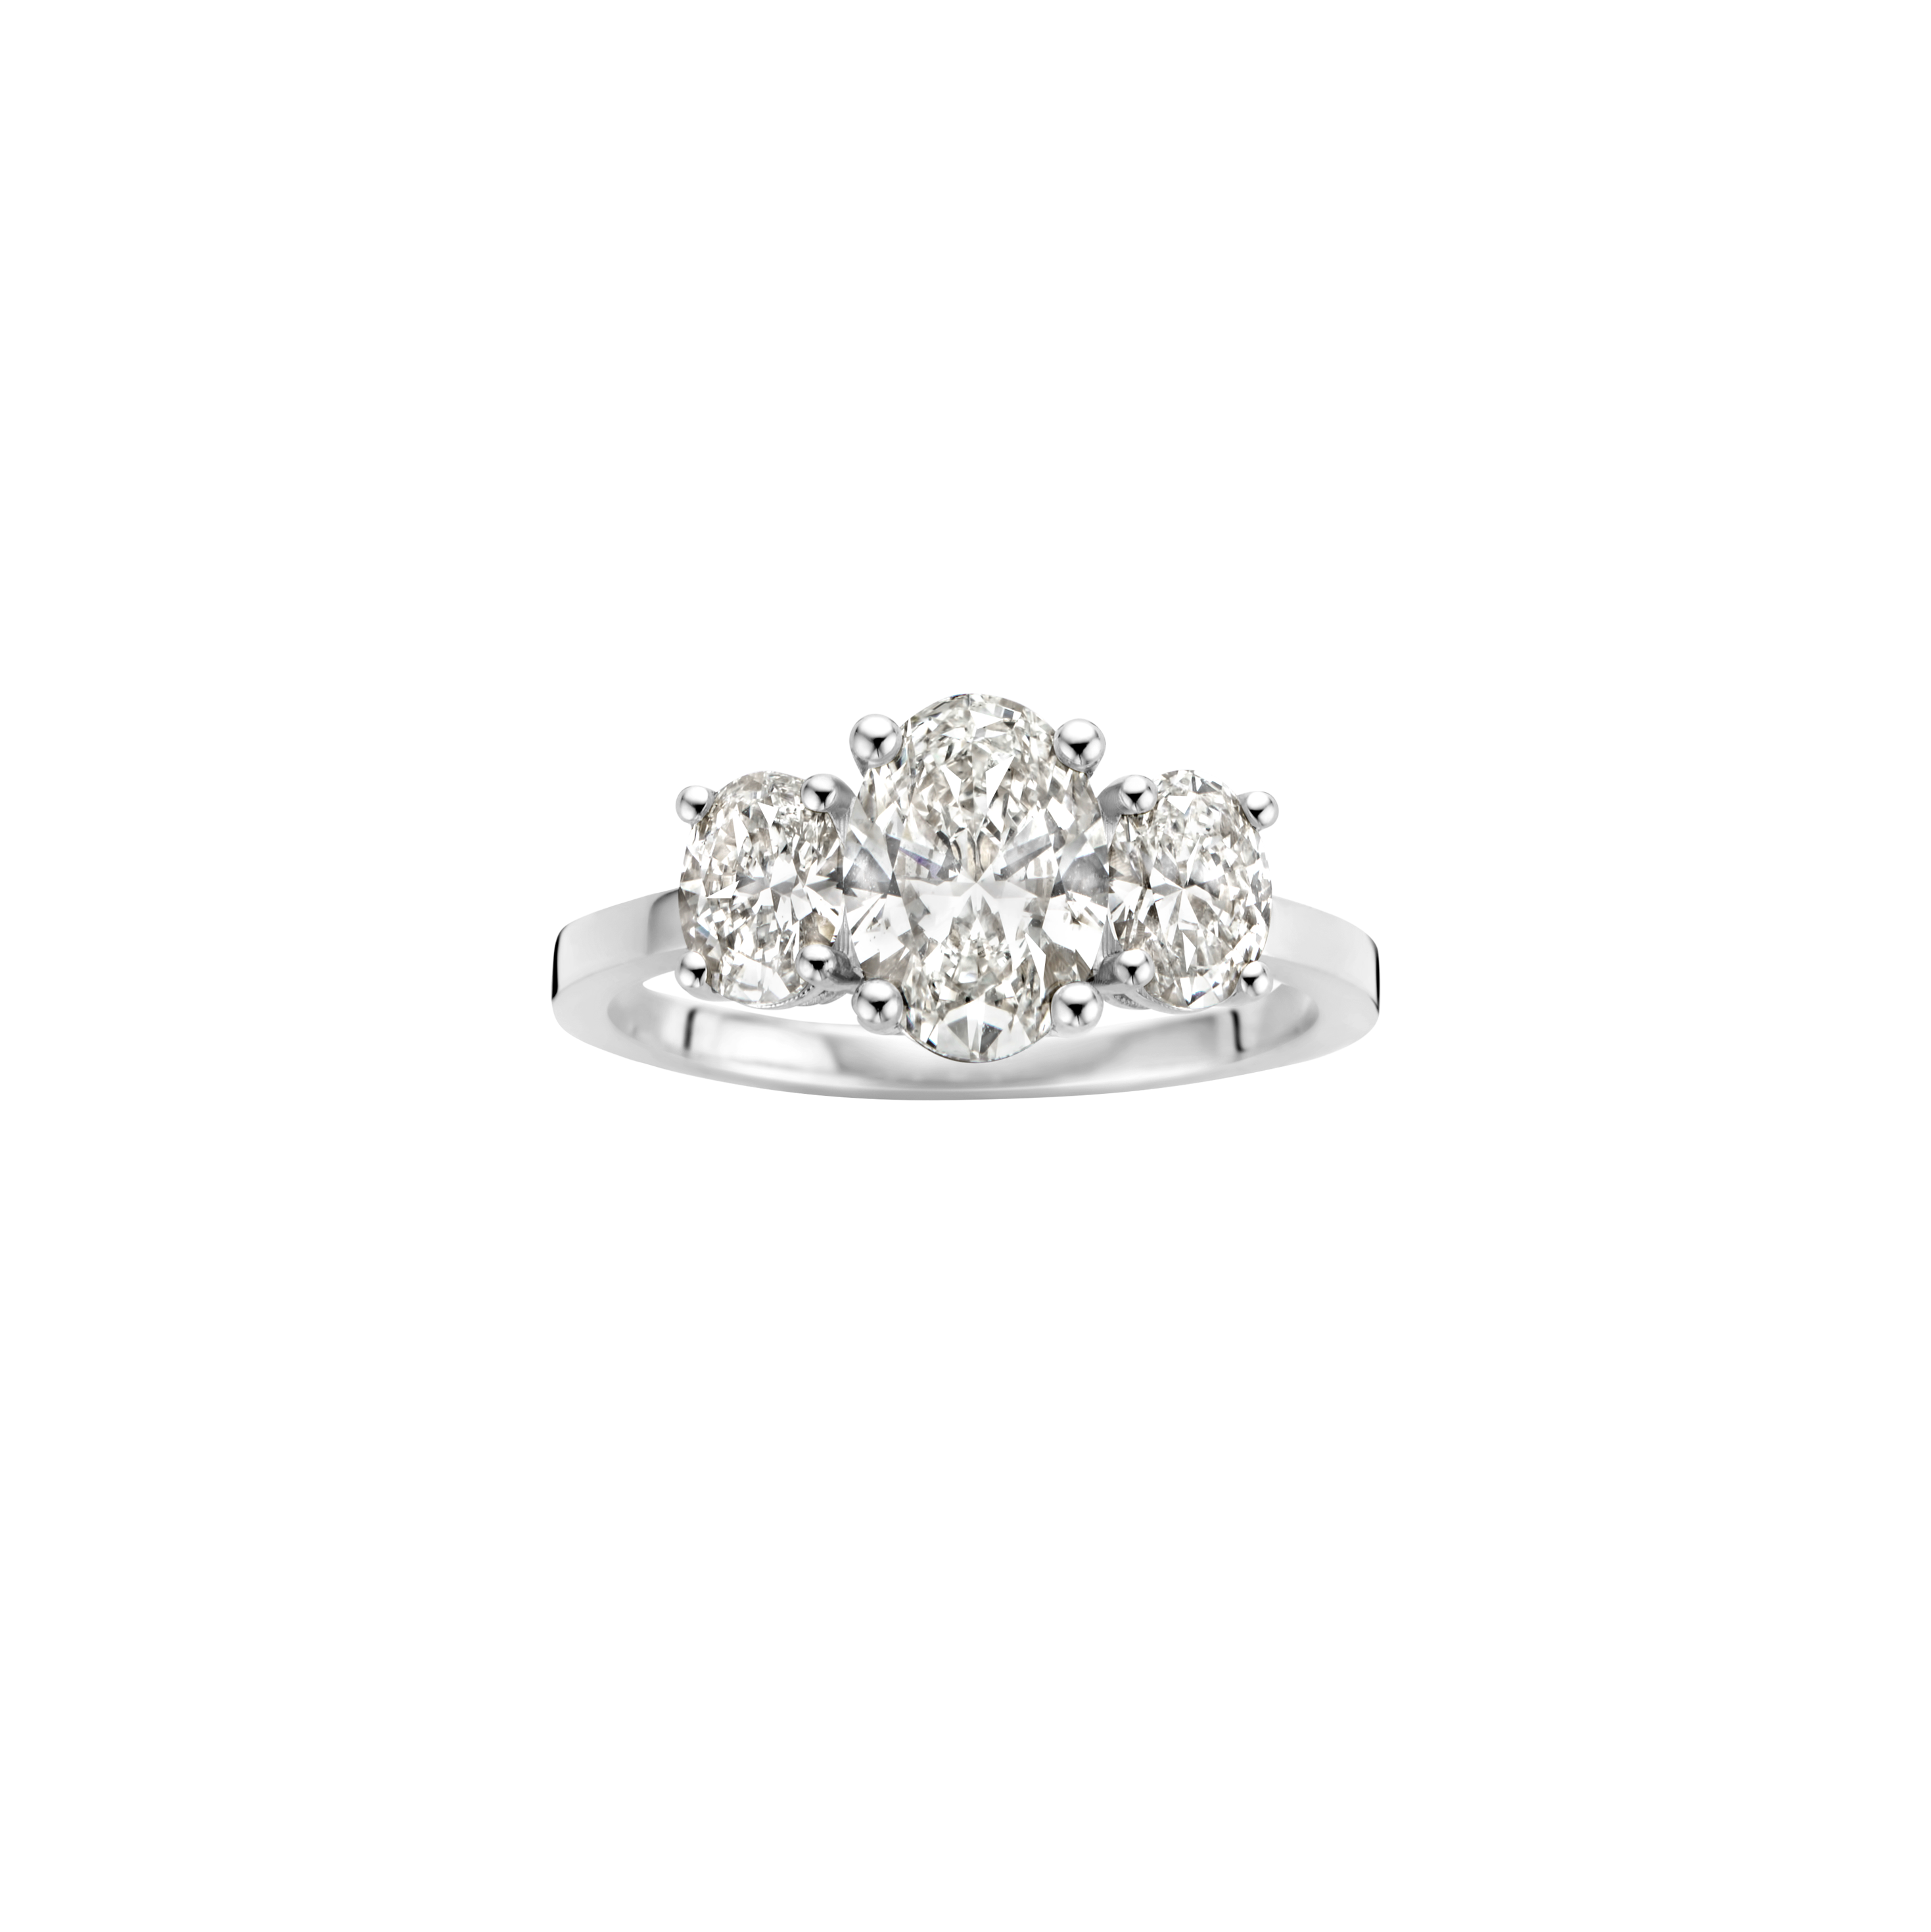 Jane engagement ring packshot - platinum gold